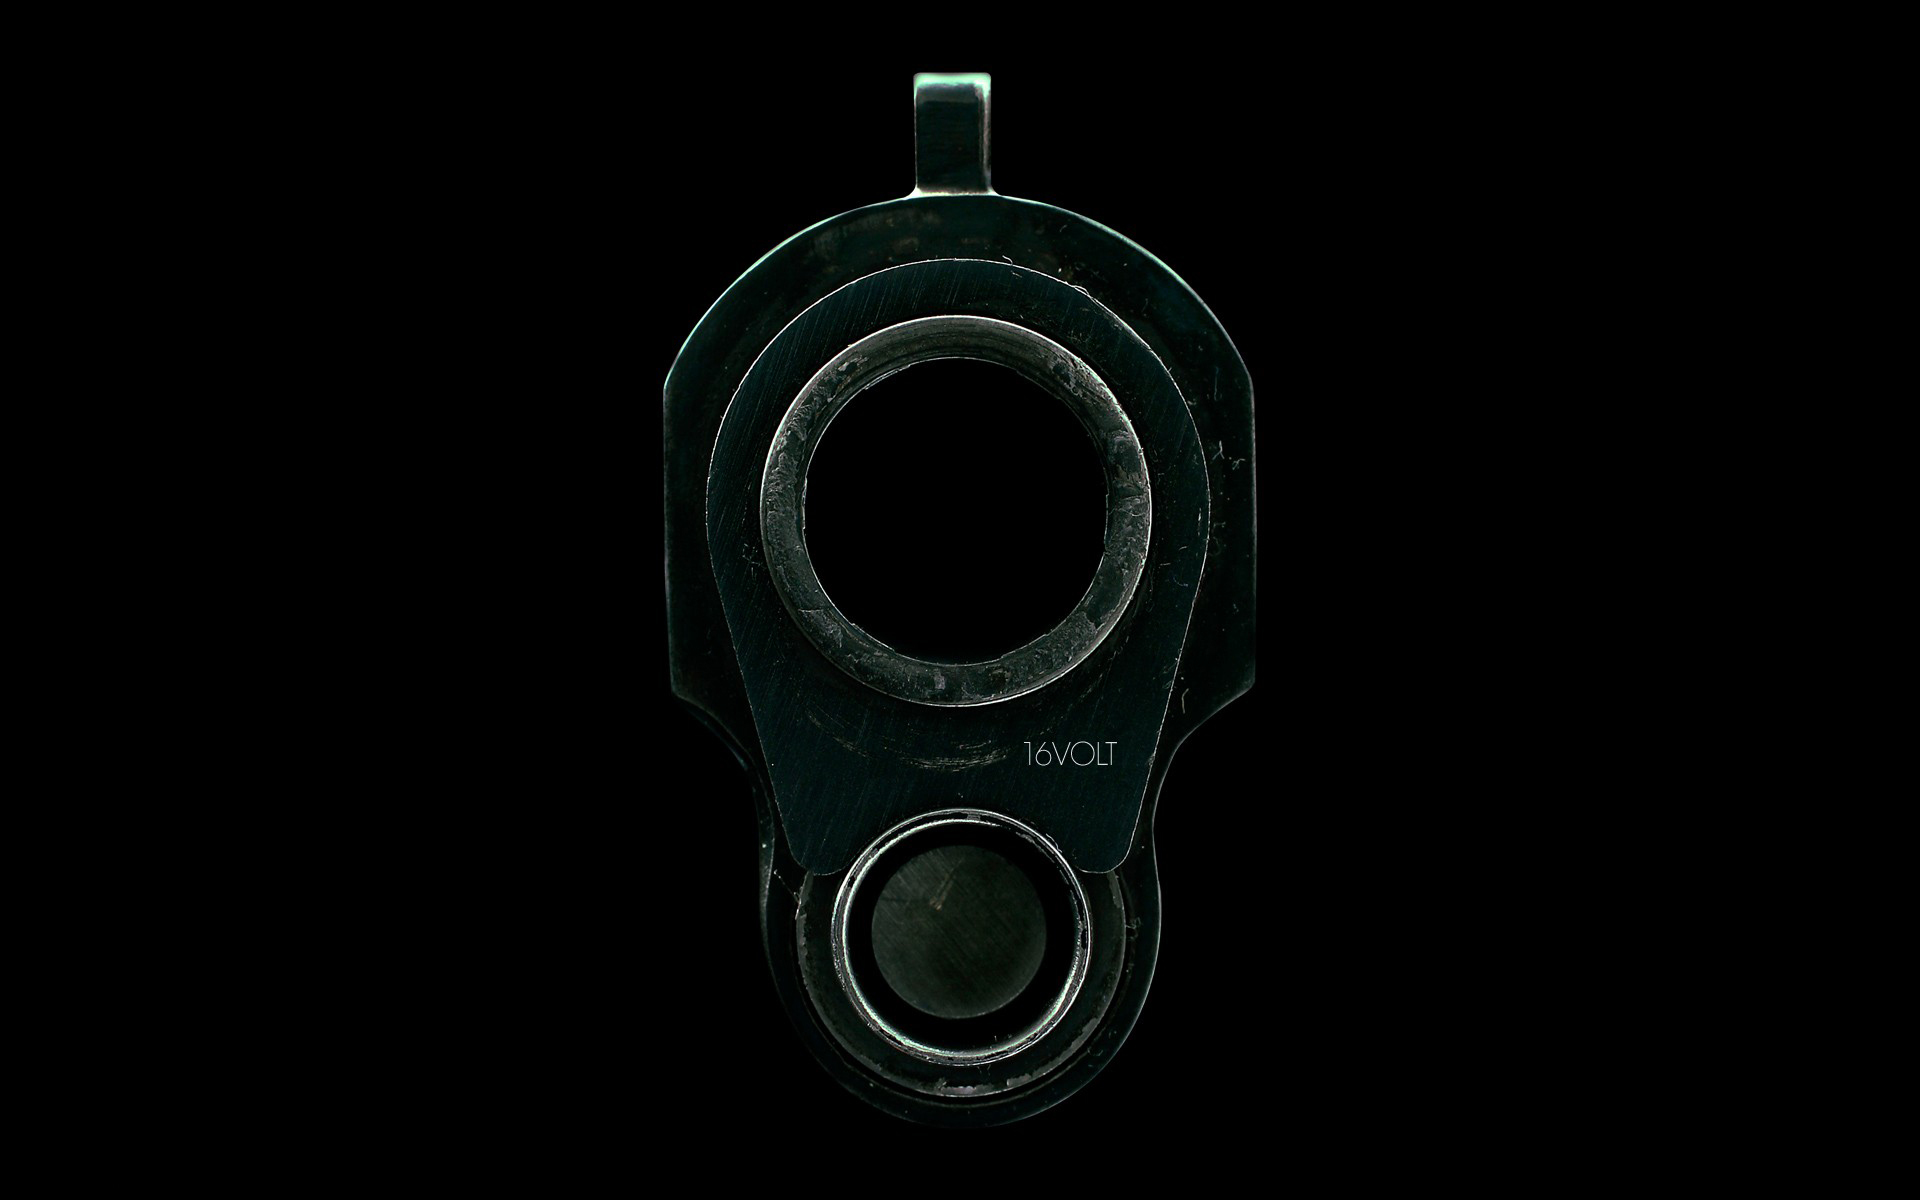 Man Made Pistol HD Wallpaper | Background Image